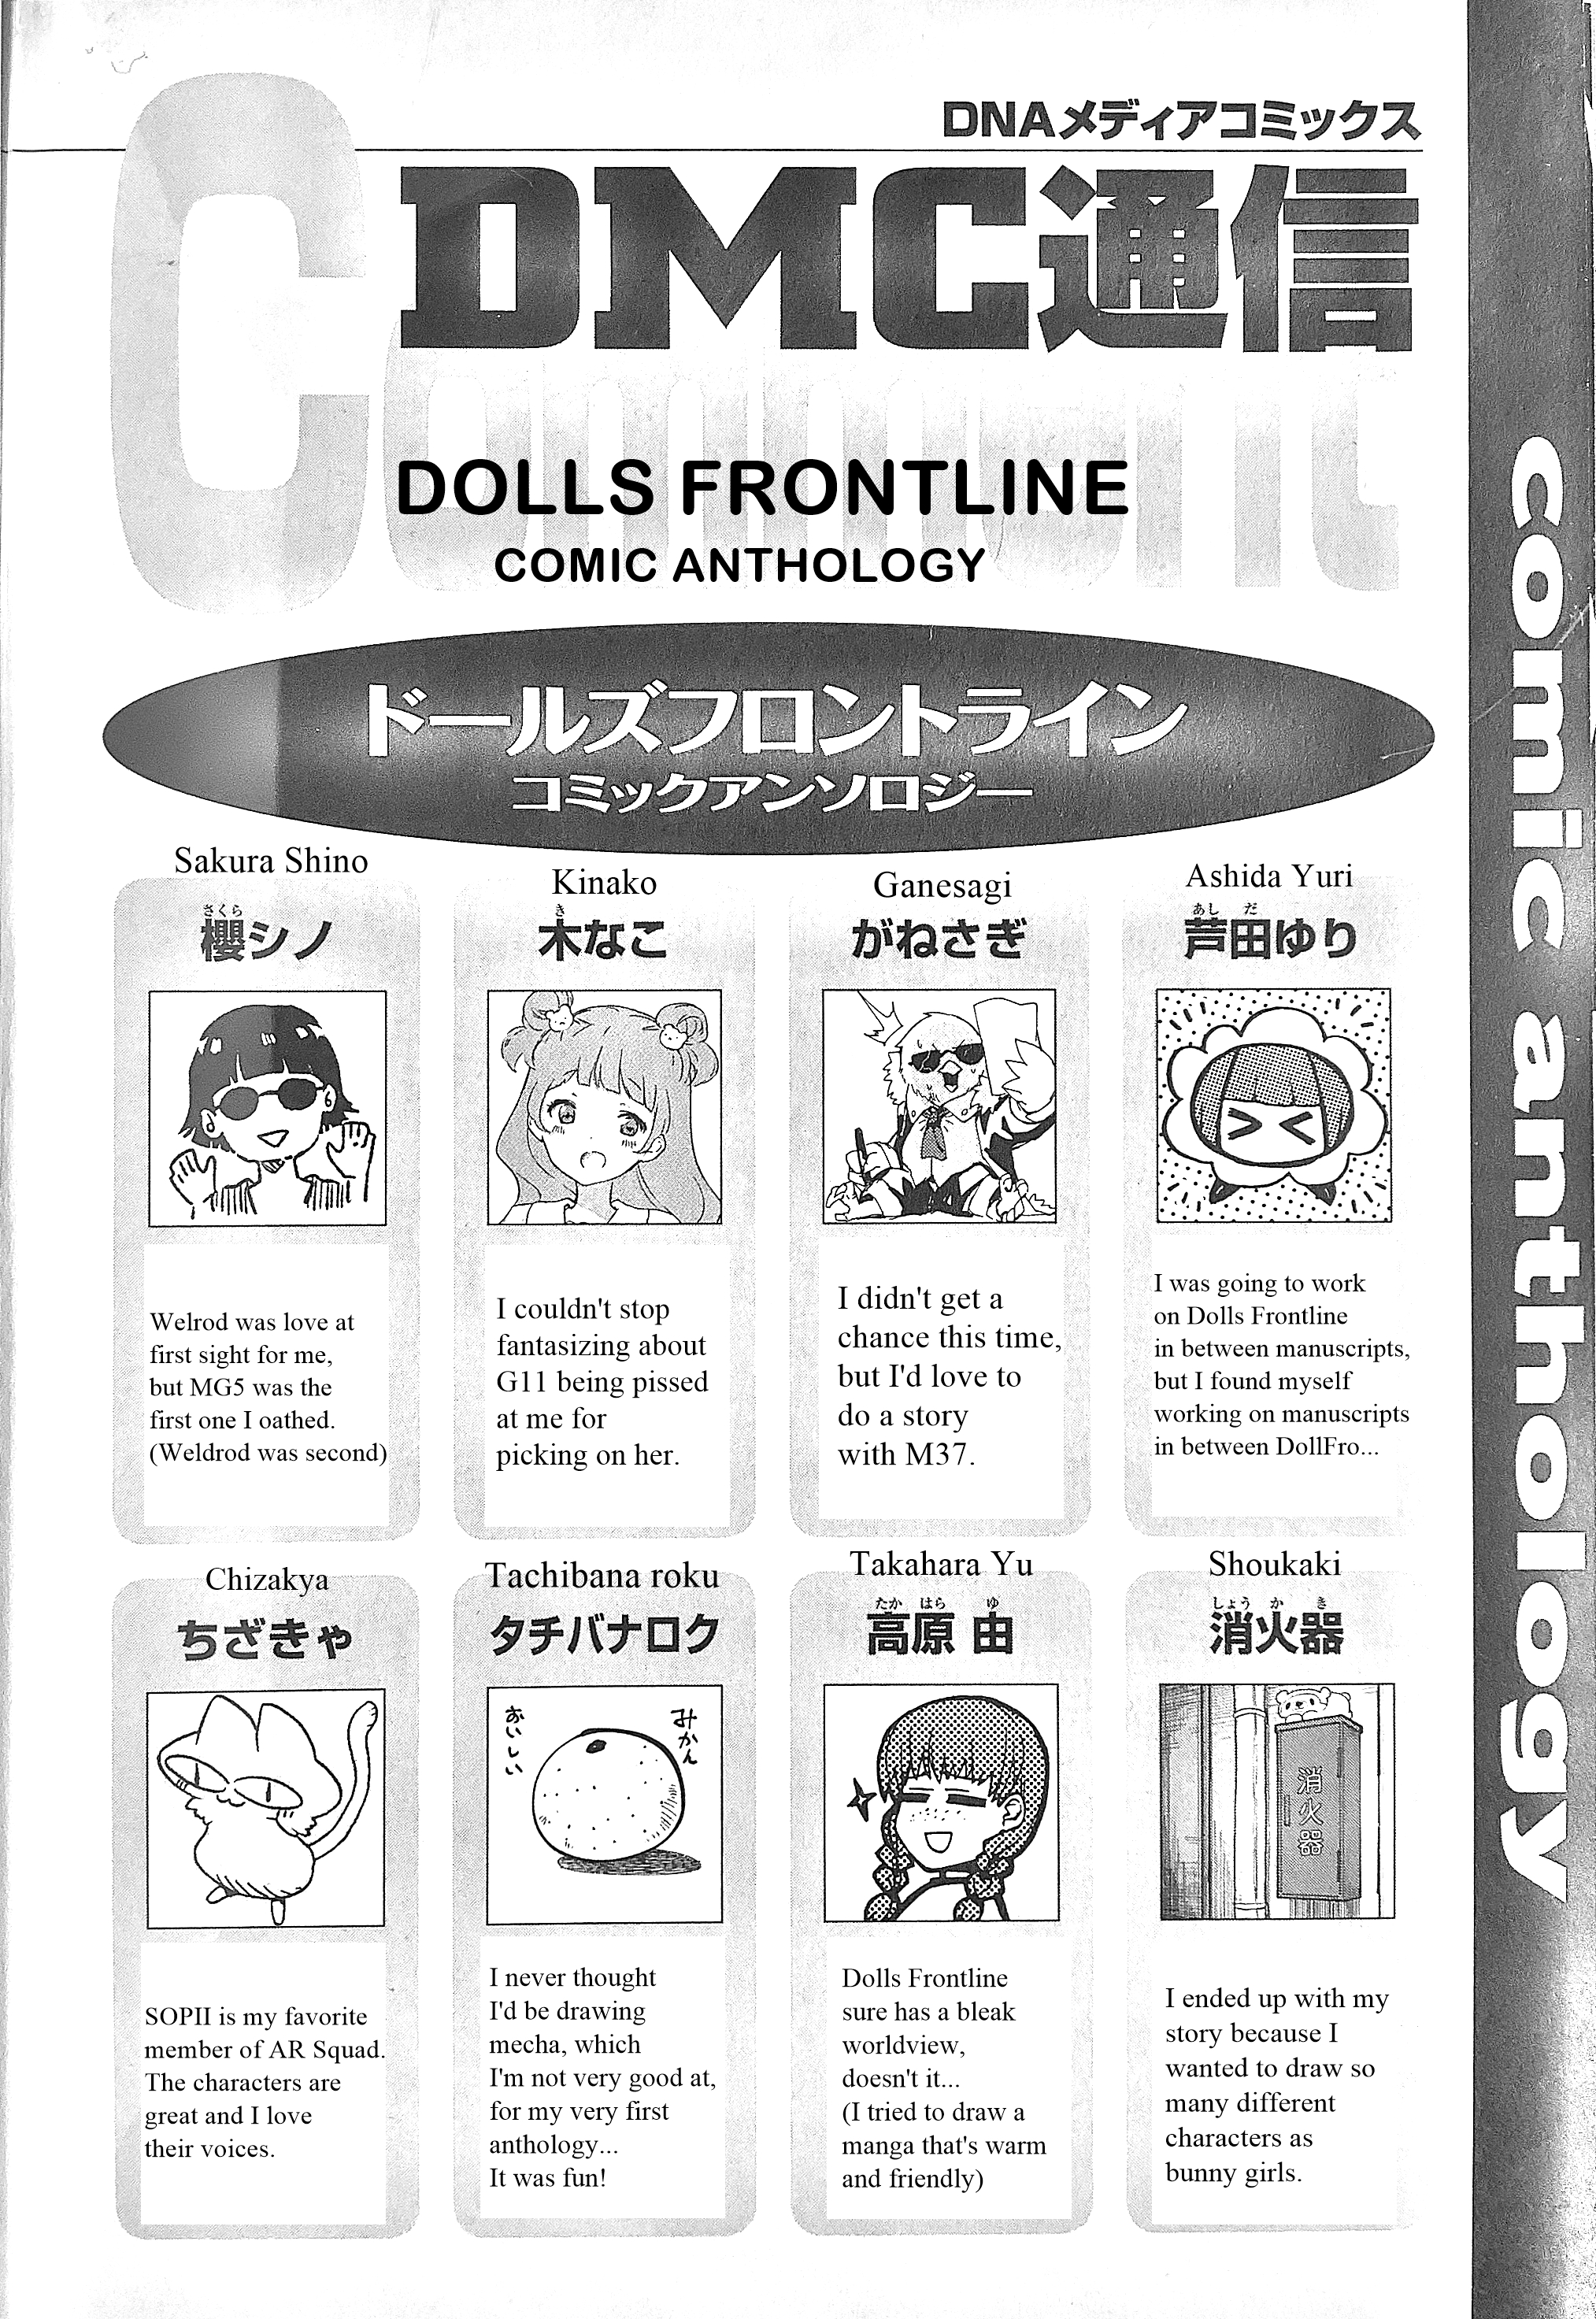 Dolls Frontline Comic Anthology - DNA Media 2019 - Chapter 15655 - Artist Comments and Back Cover - Image 1